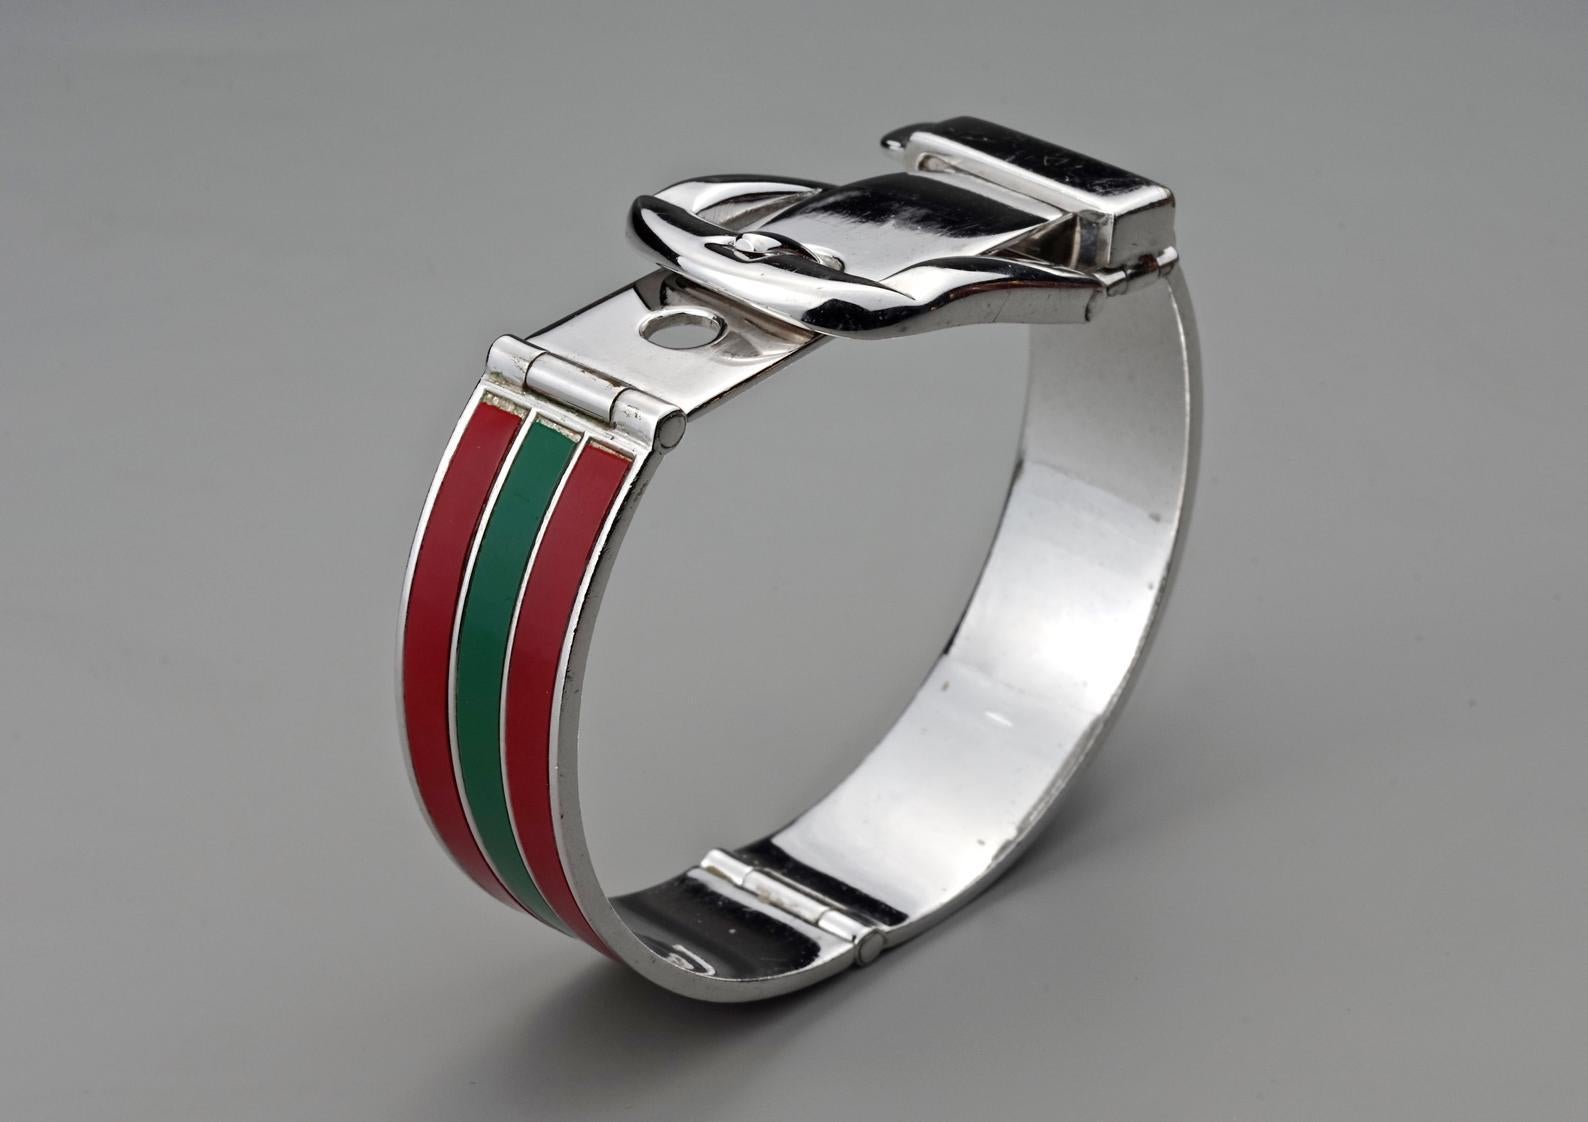 gucci belt bracelet